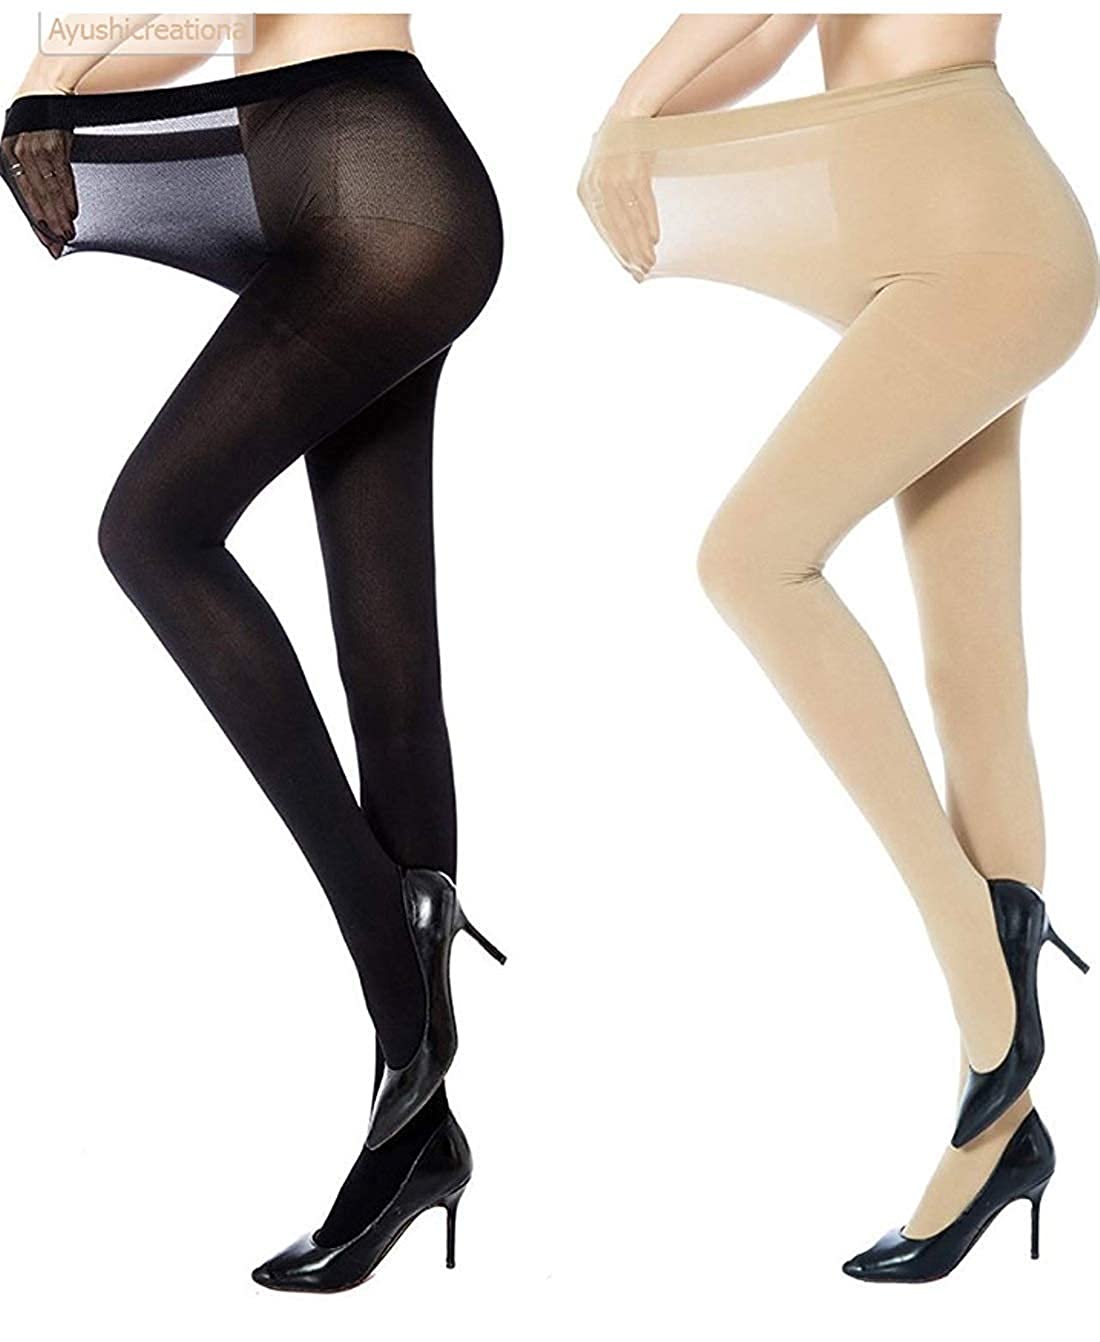 Women's Nylon Panty Hose Long Exotic Stockings Tights - Pack of 02 [ Nari  -238]